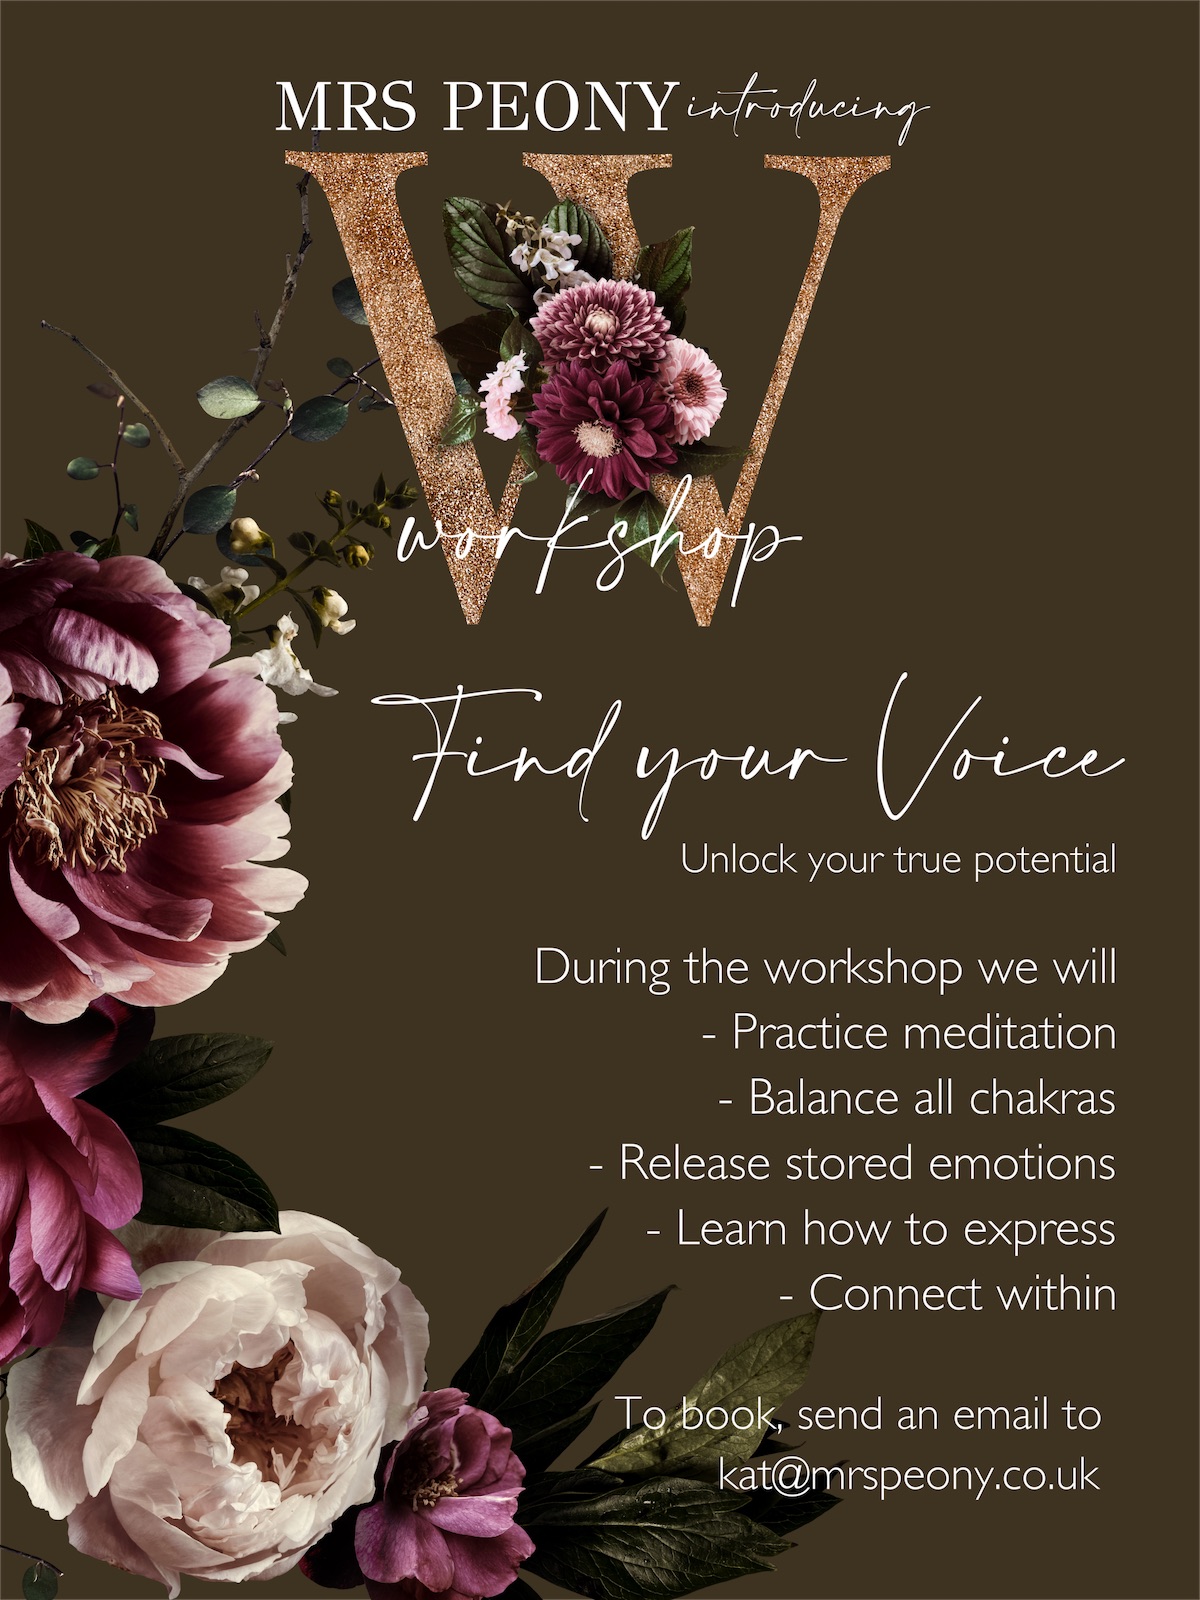 Find your voice workshop